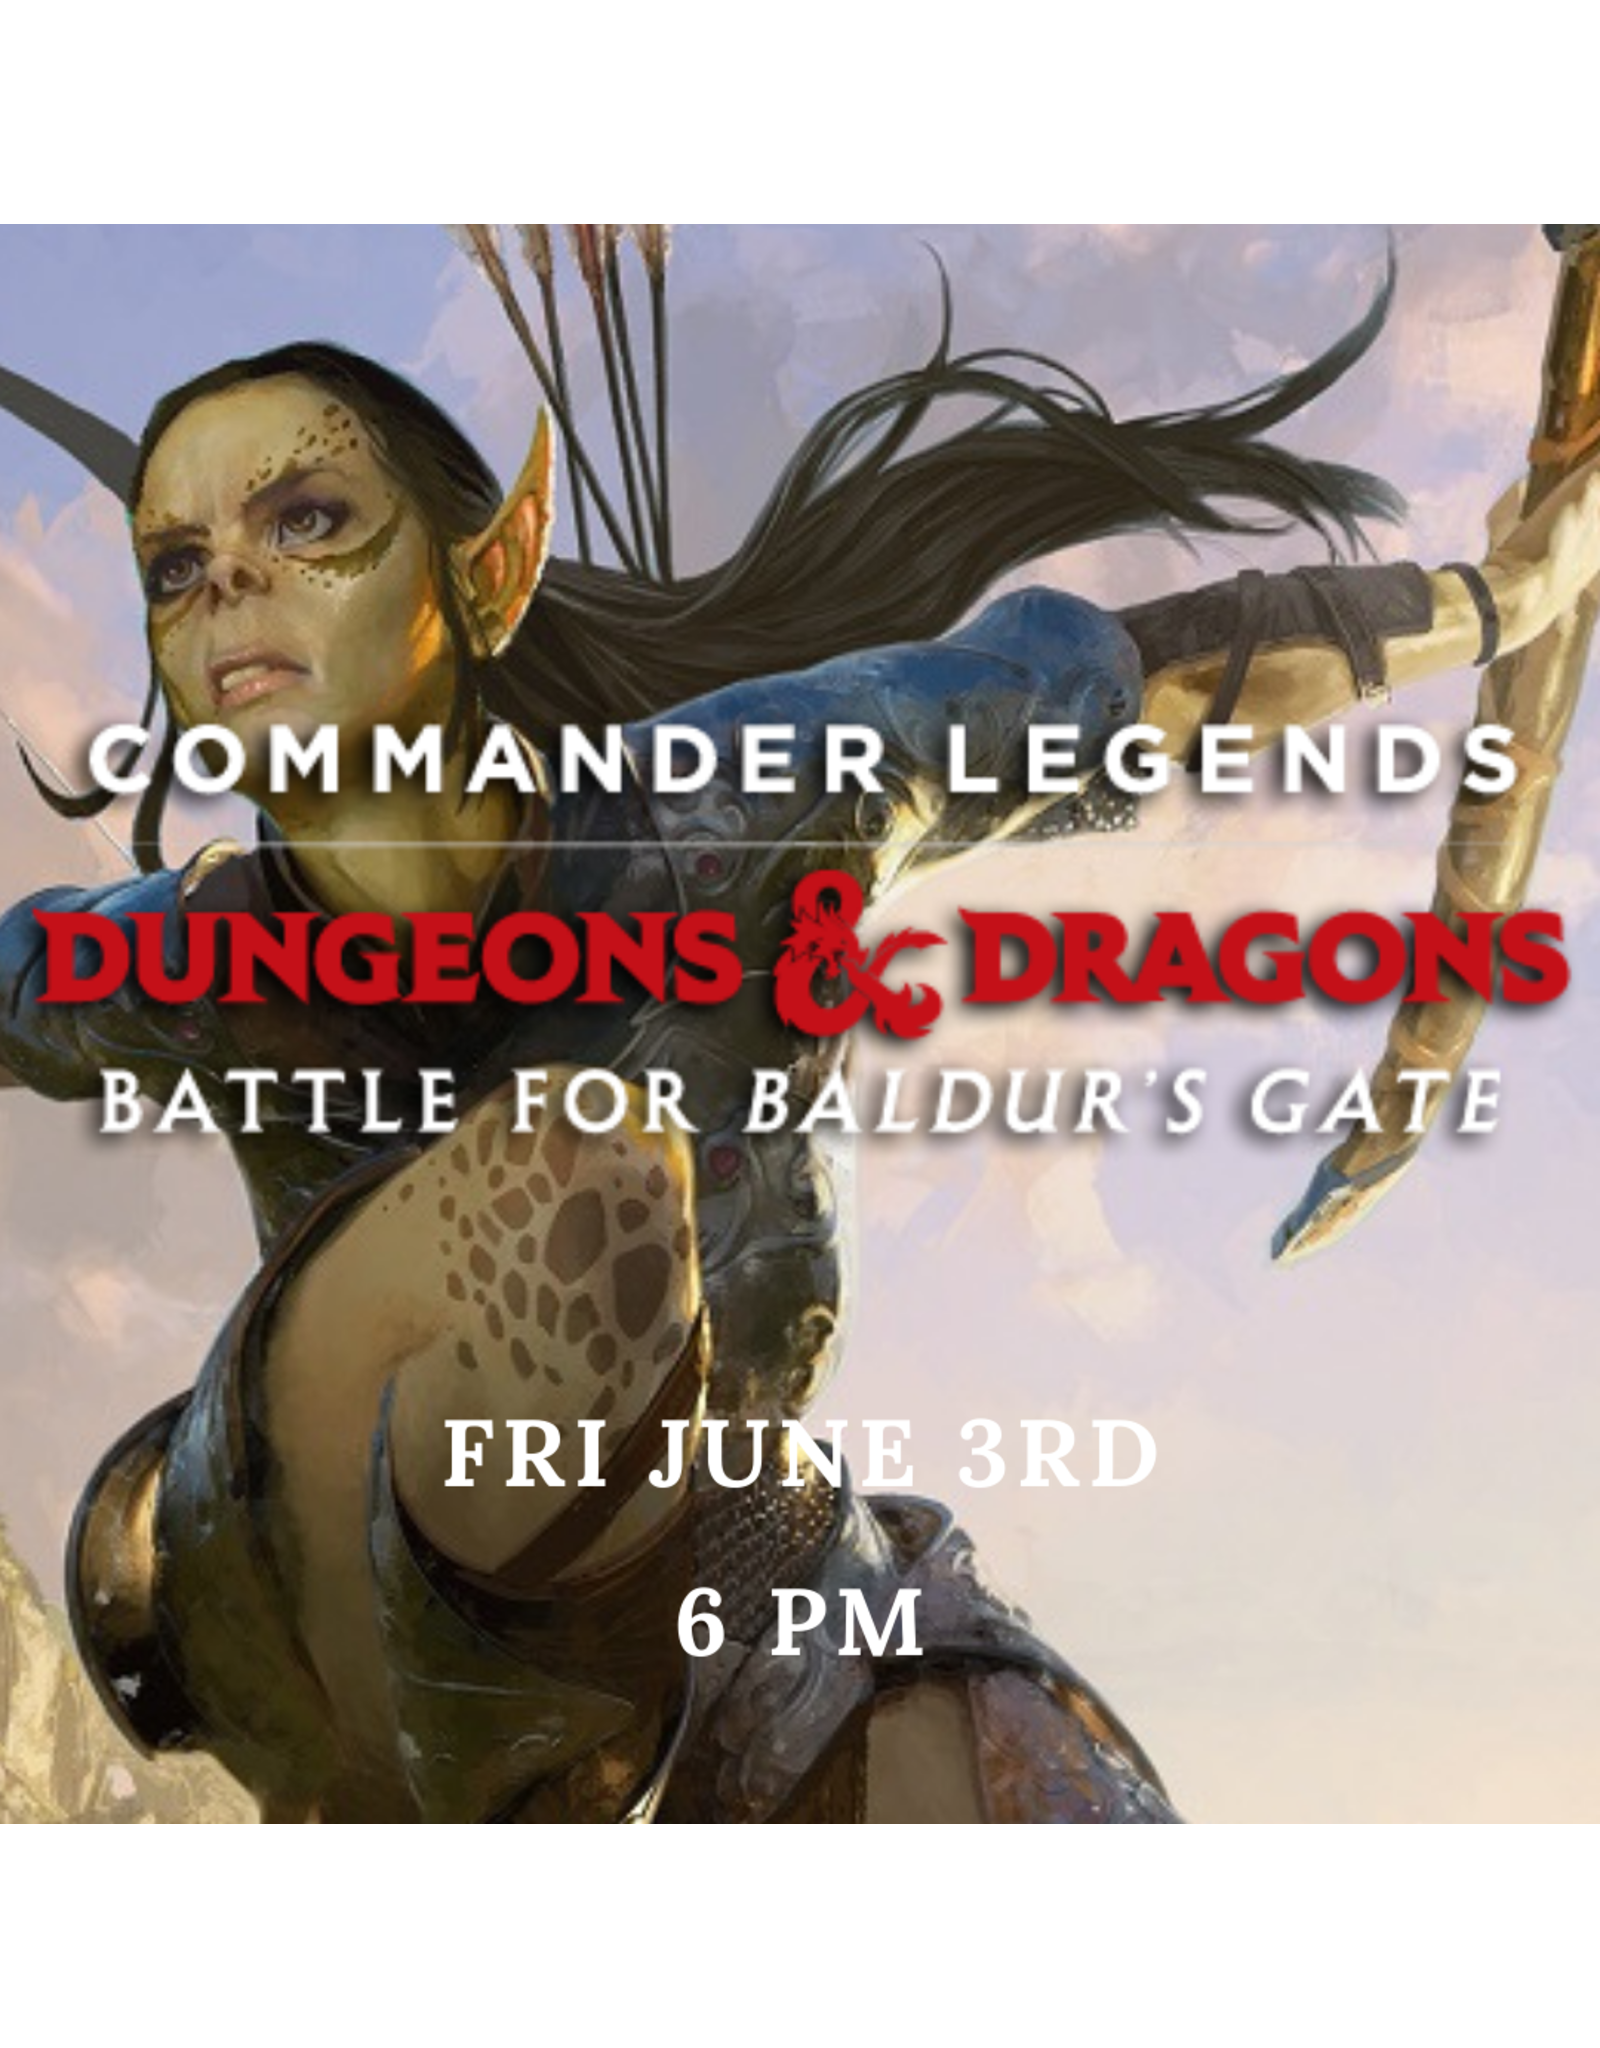 Battle for Baldur's Gate Prerelease - Friday June 3rd @ 6 pm